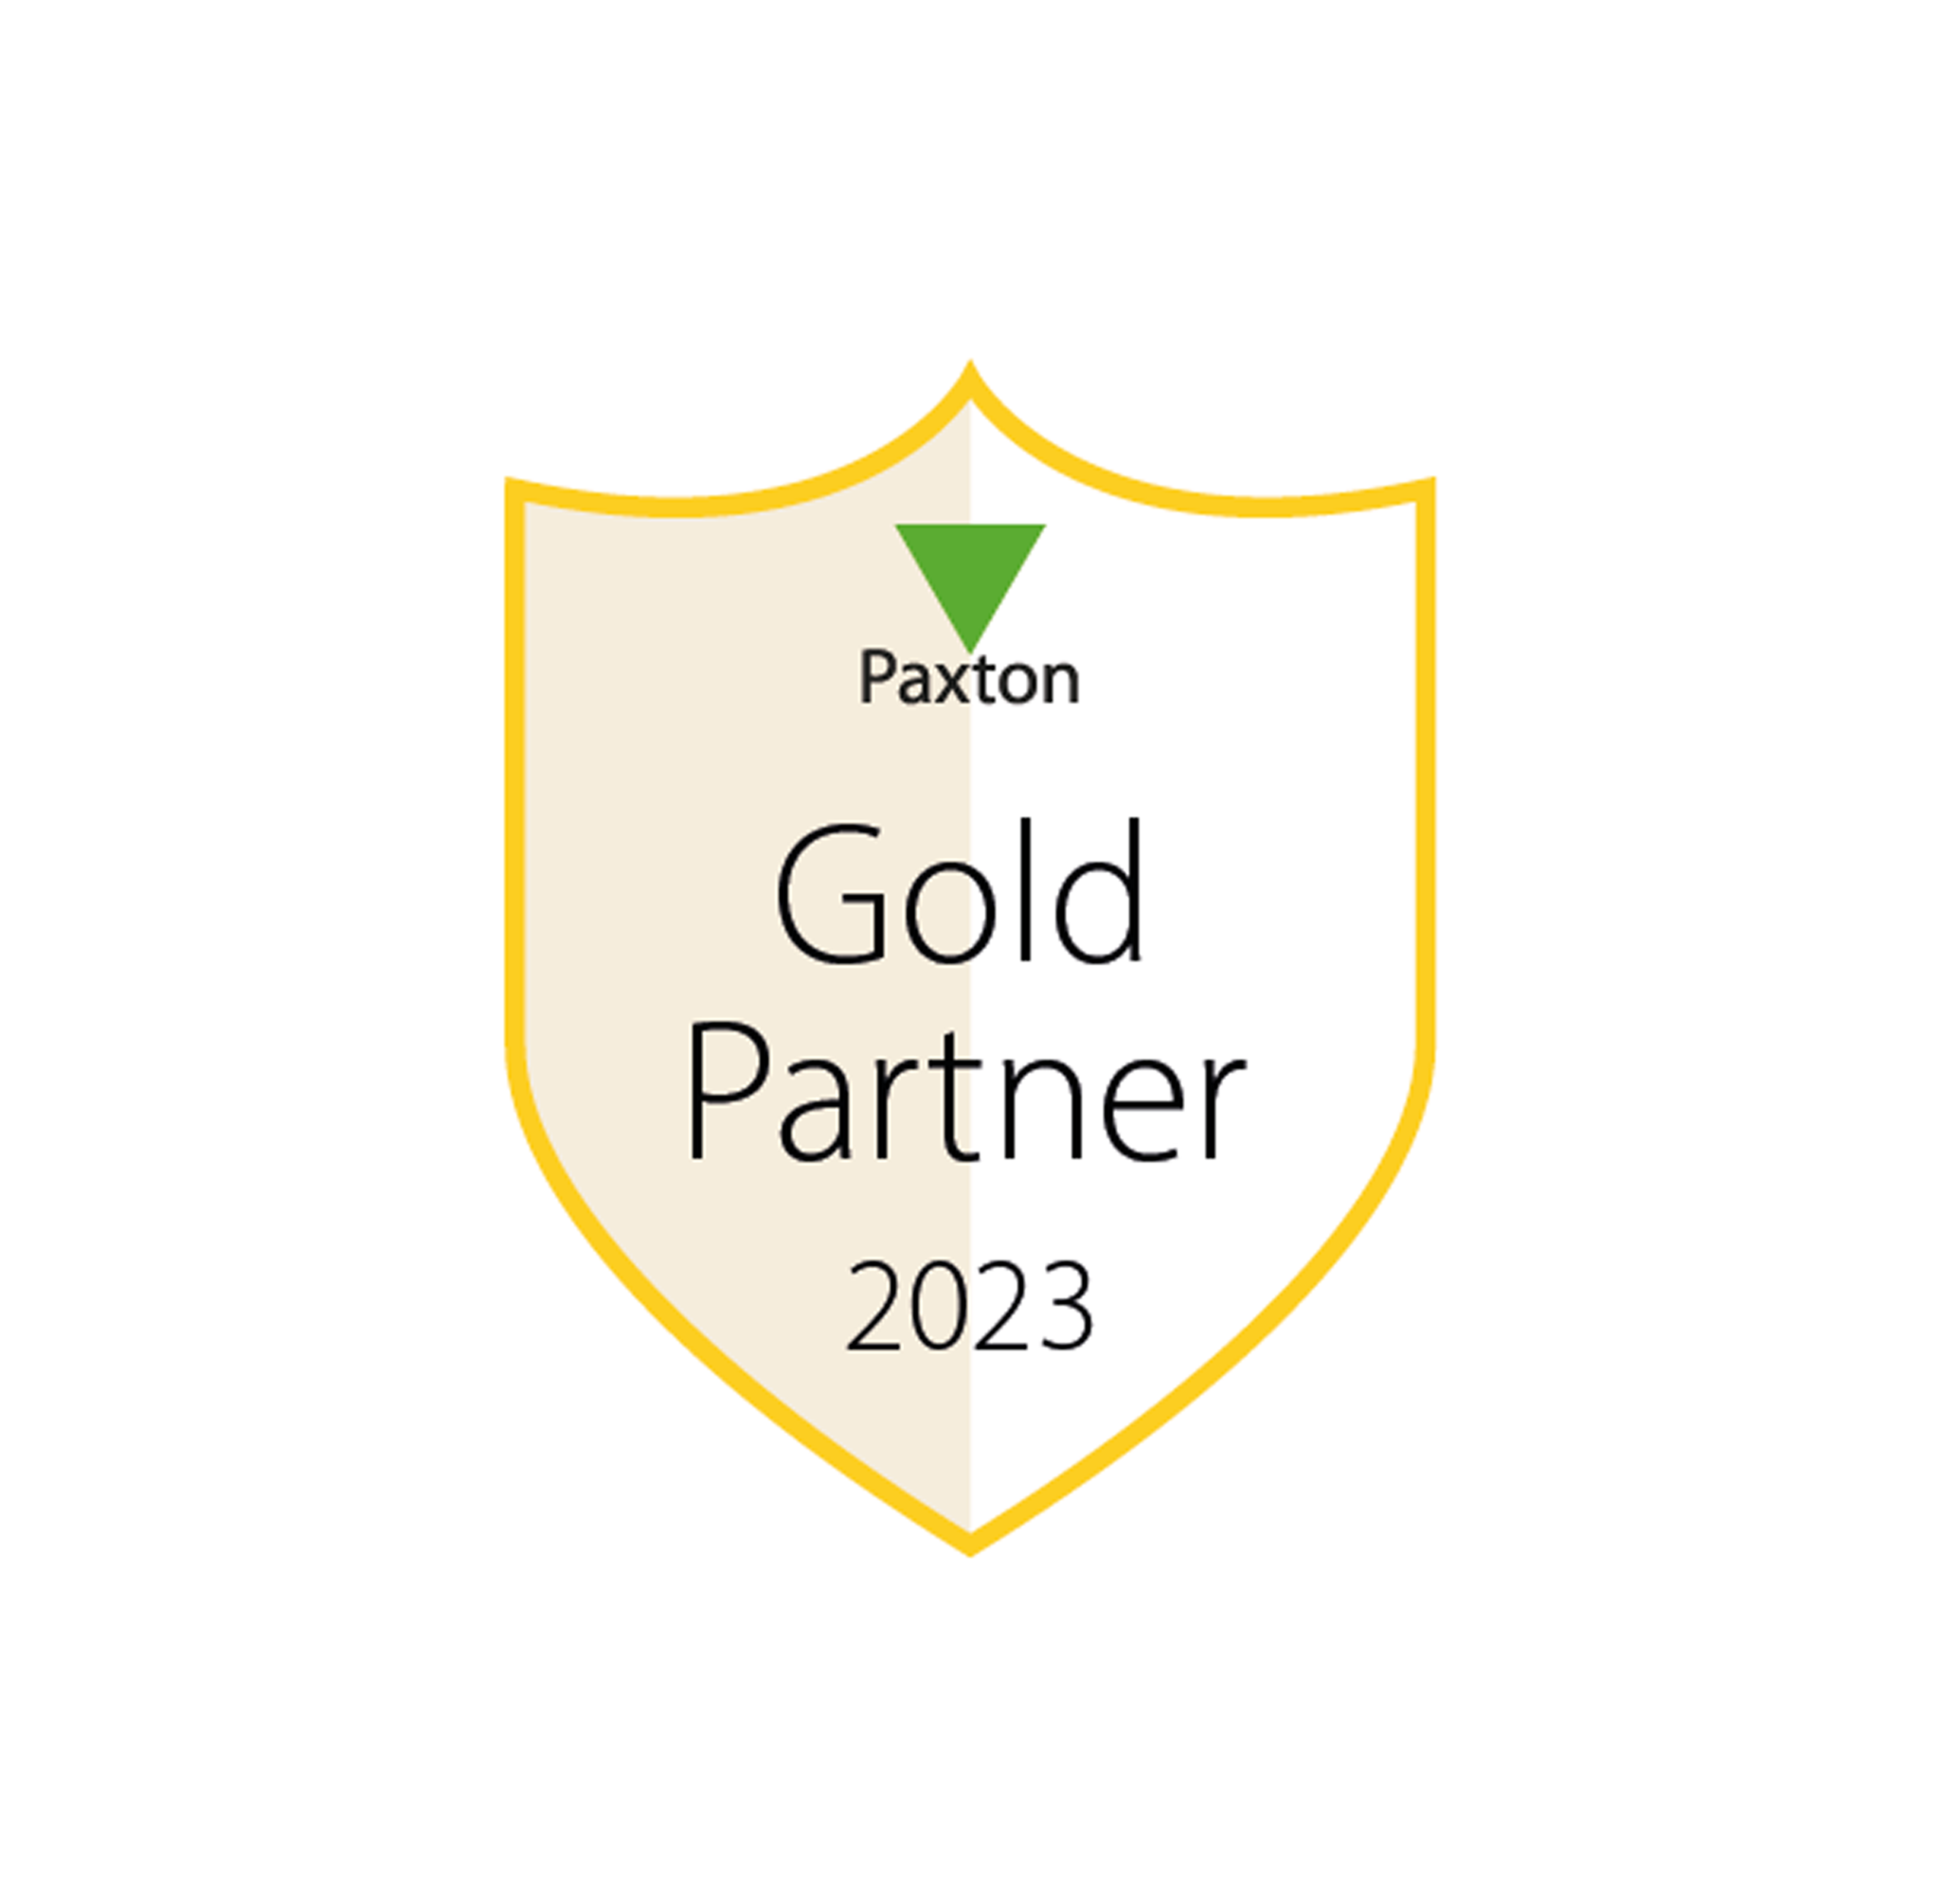 Paxton Gold Partner